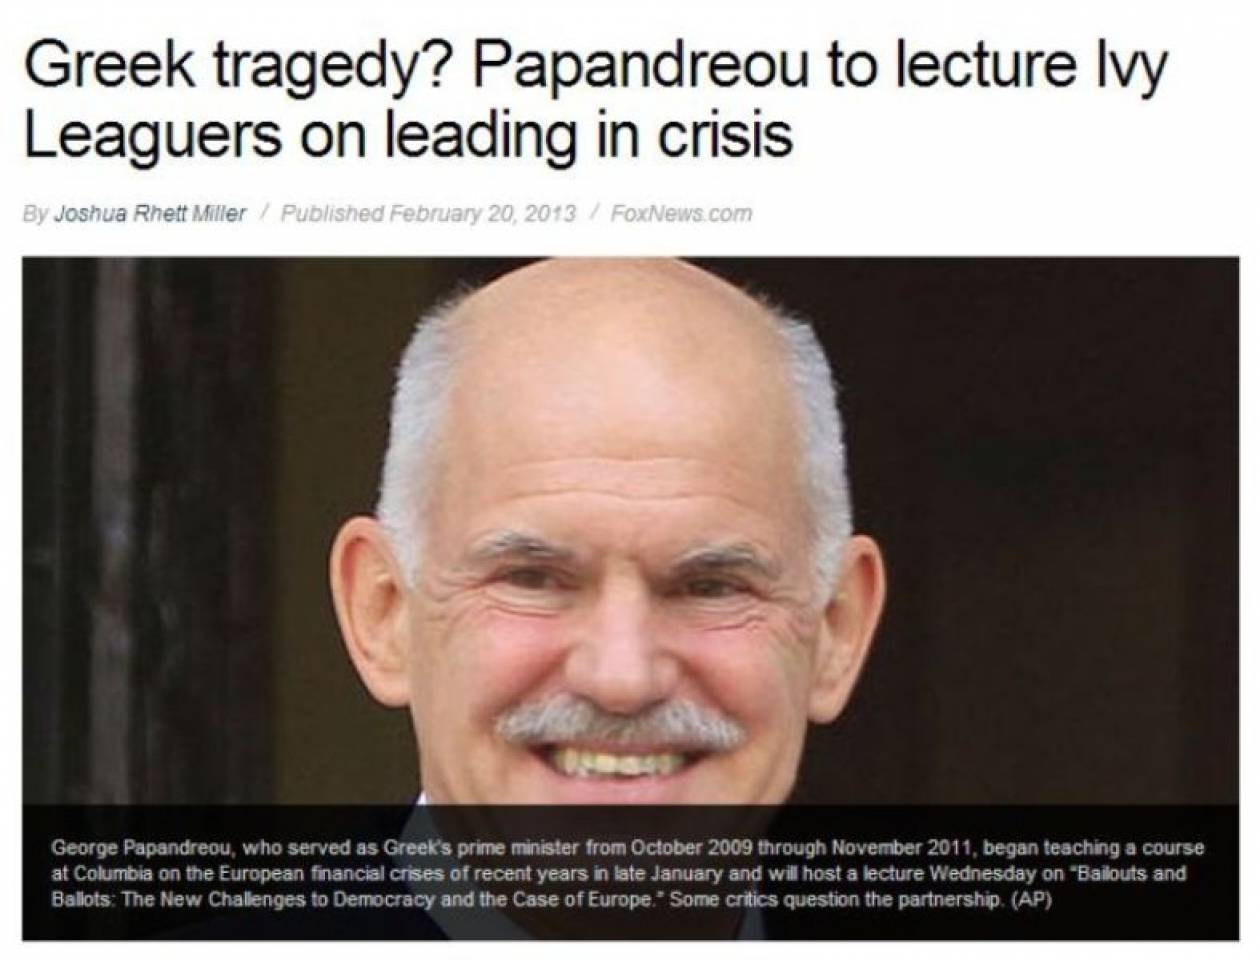 Fox News: Τραγωδία; Ο Παπανδρέου διδάσκει για την κρίση!